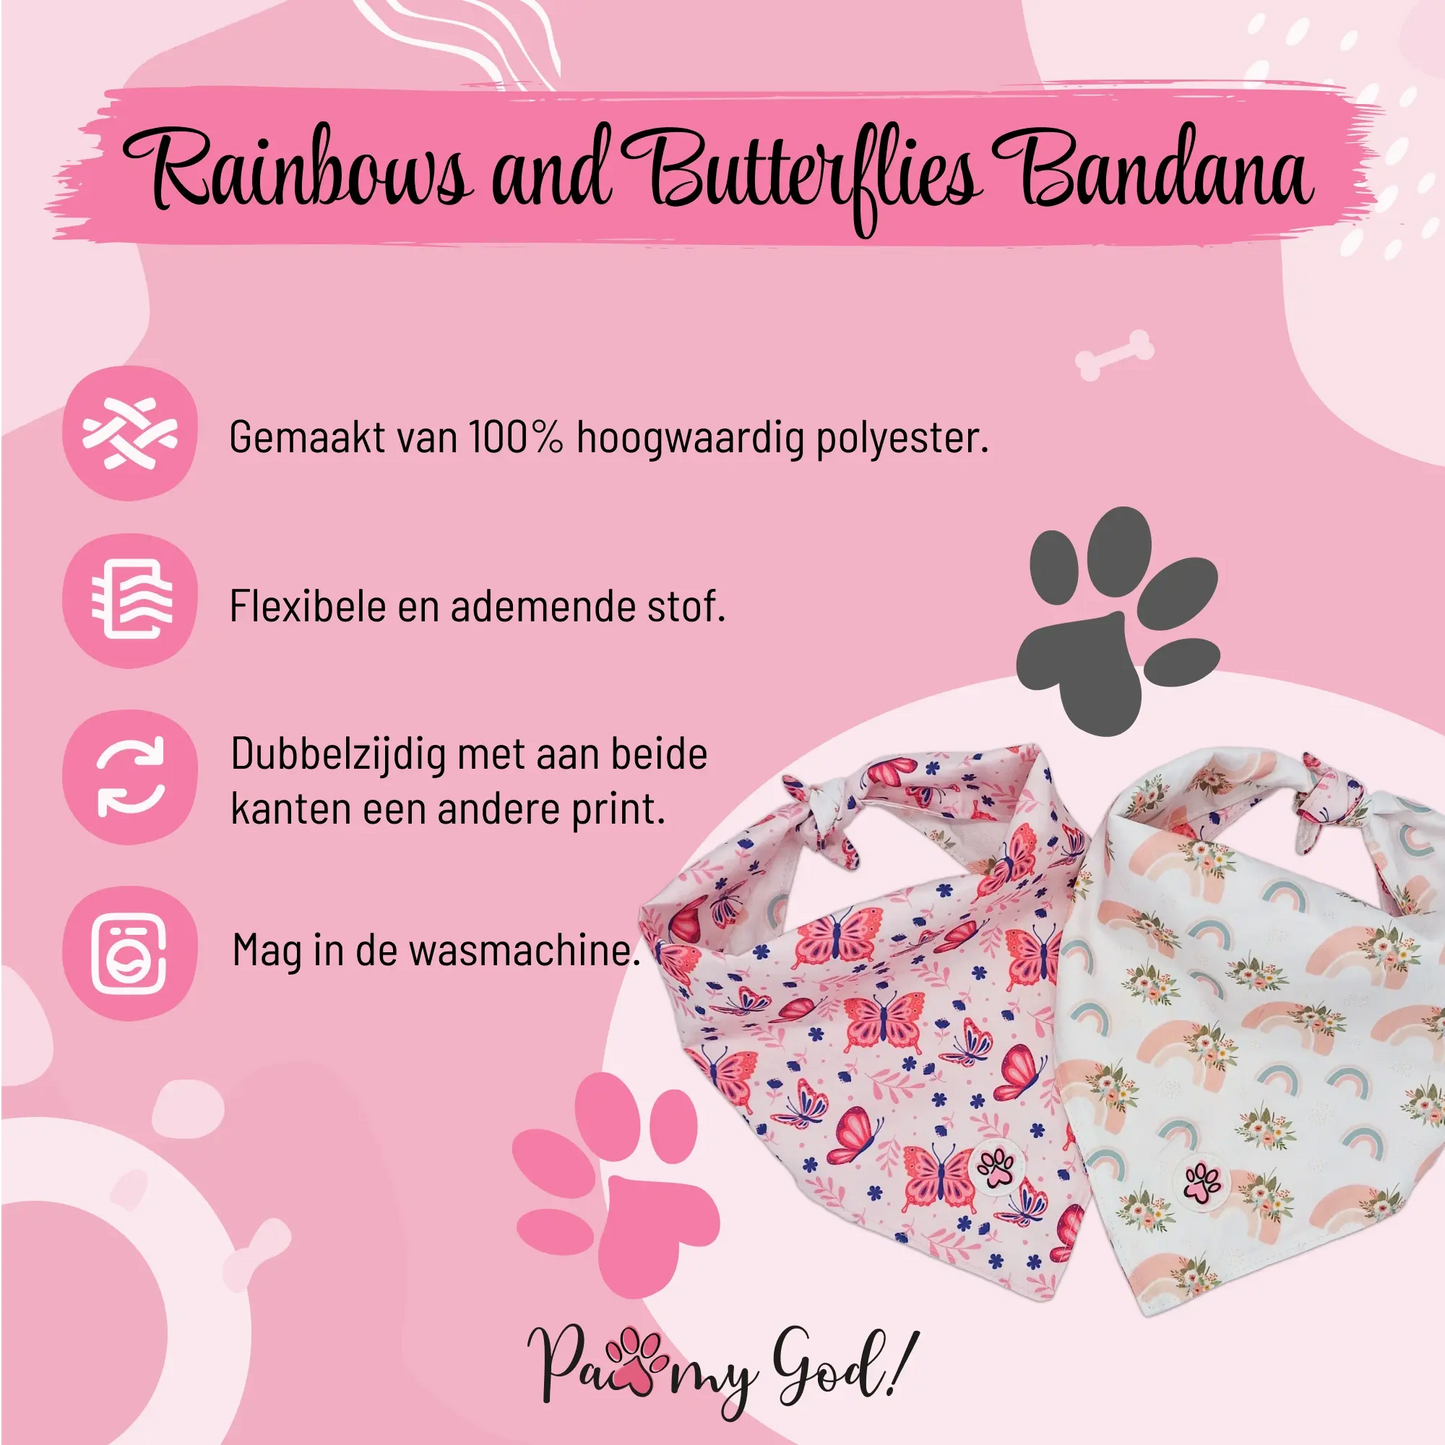 Rainbows and Butterflies Bandana Features